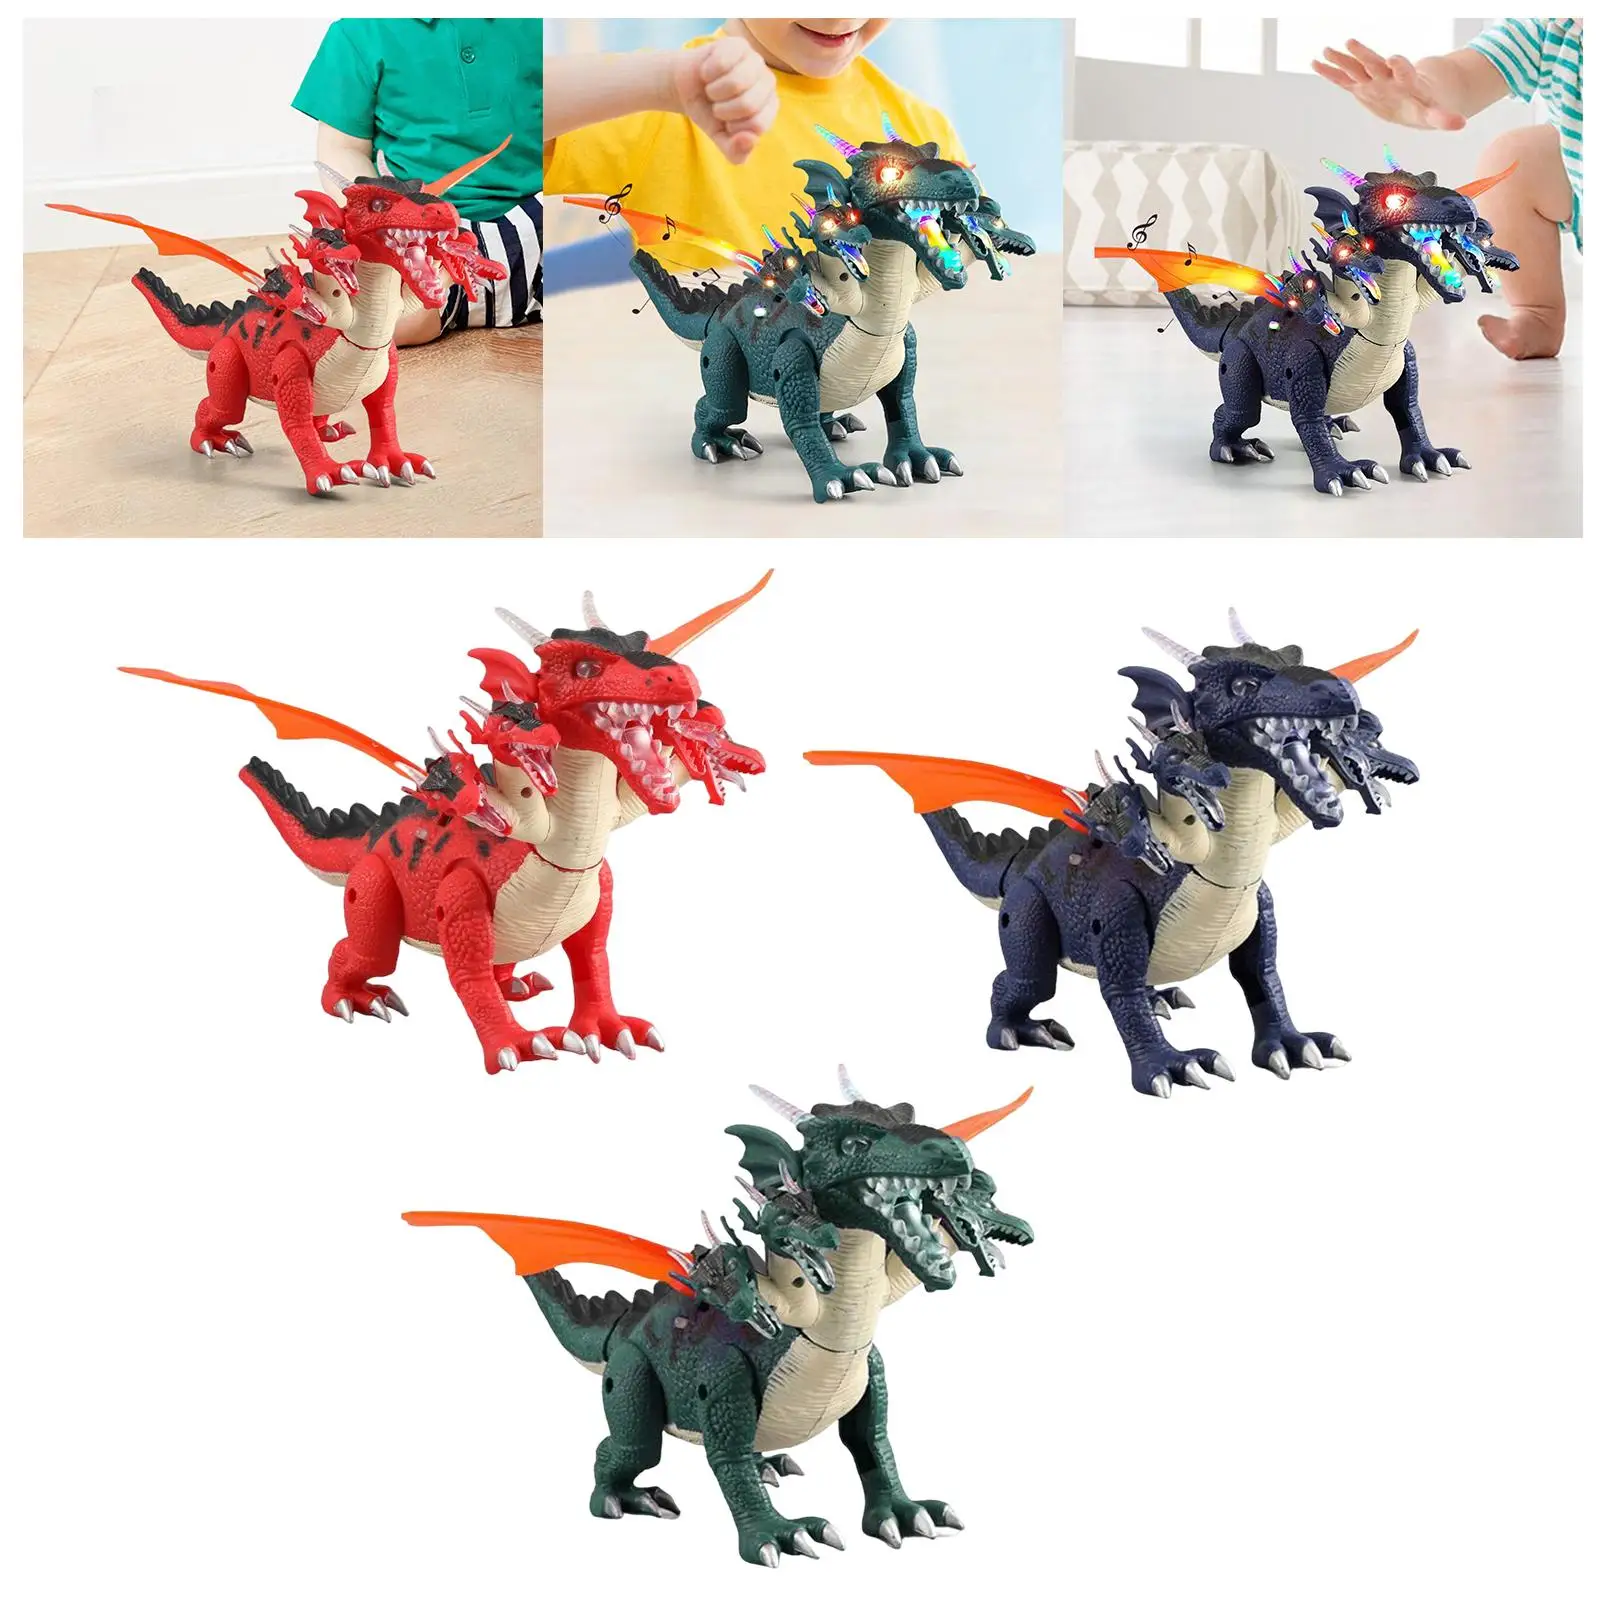 Moving Electronic Dinosaur Toys Lighting Roaring Sound Walking Dinosaur Figure Brain Game Educational Toys Preschool Toy Outdoor